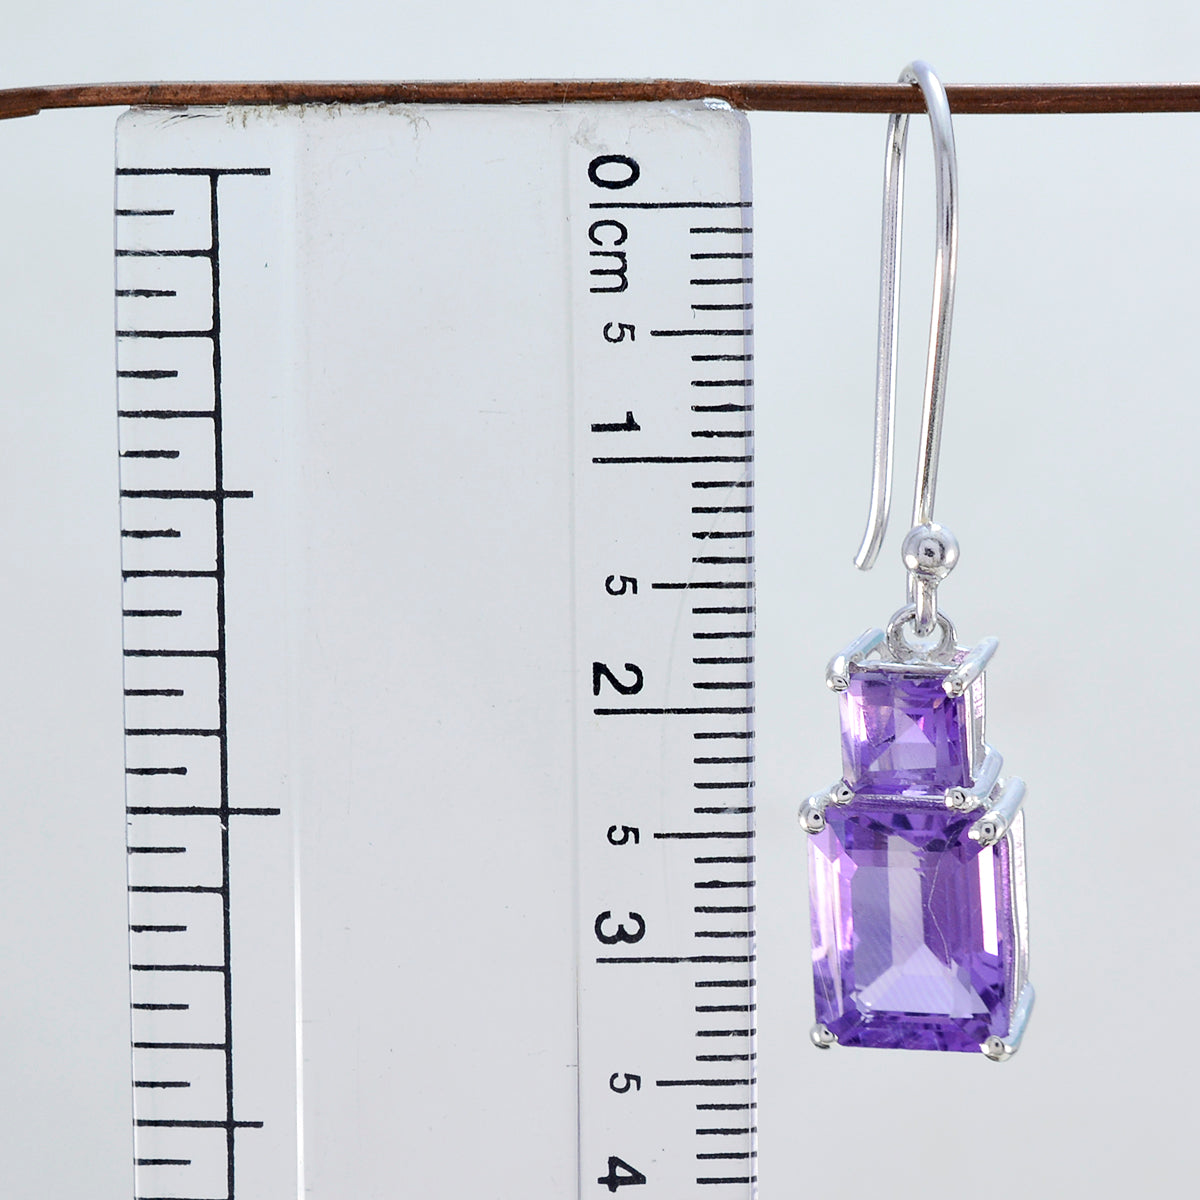 Riyo Real Gemstones Octogon Faceted Purple Amethyst Silver Earring easter Sunday gift